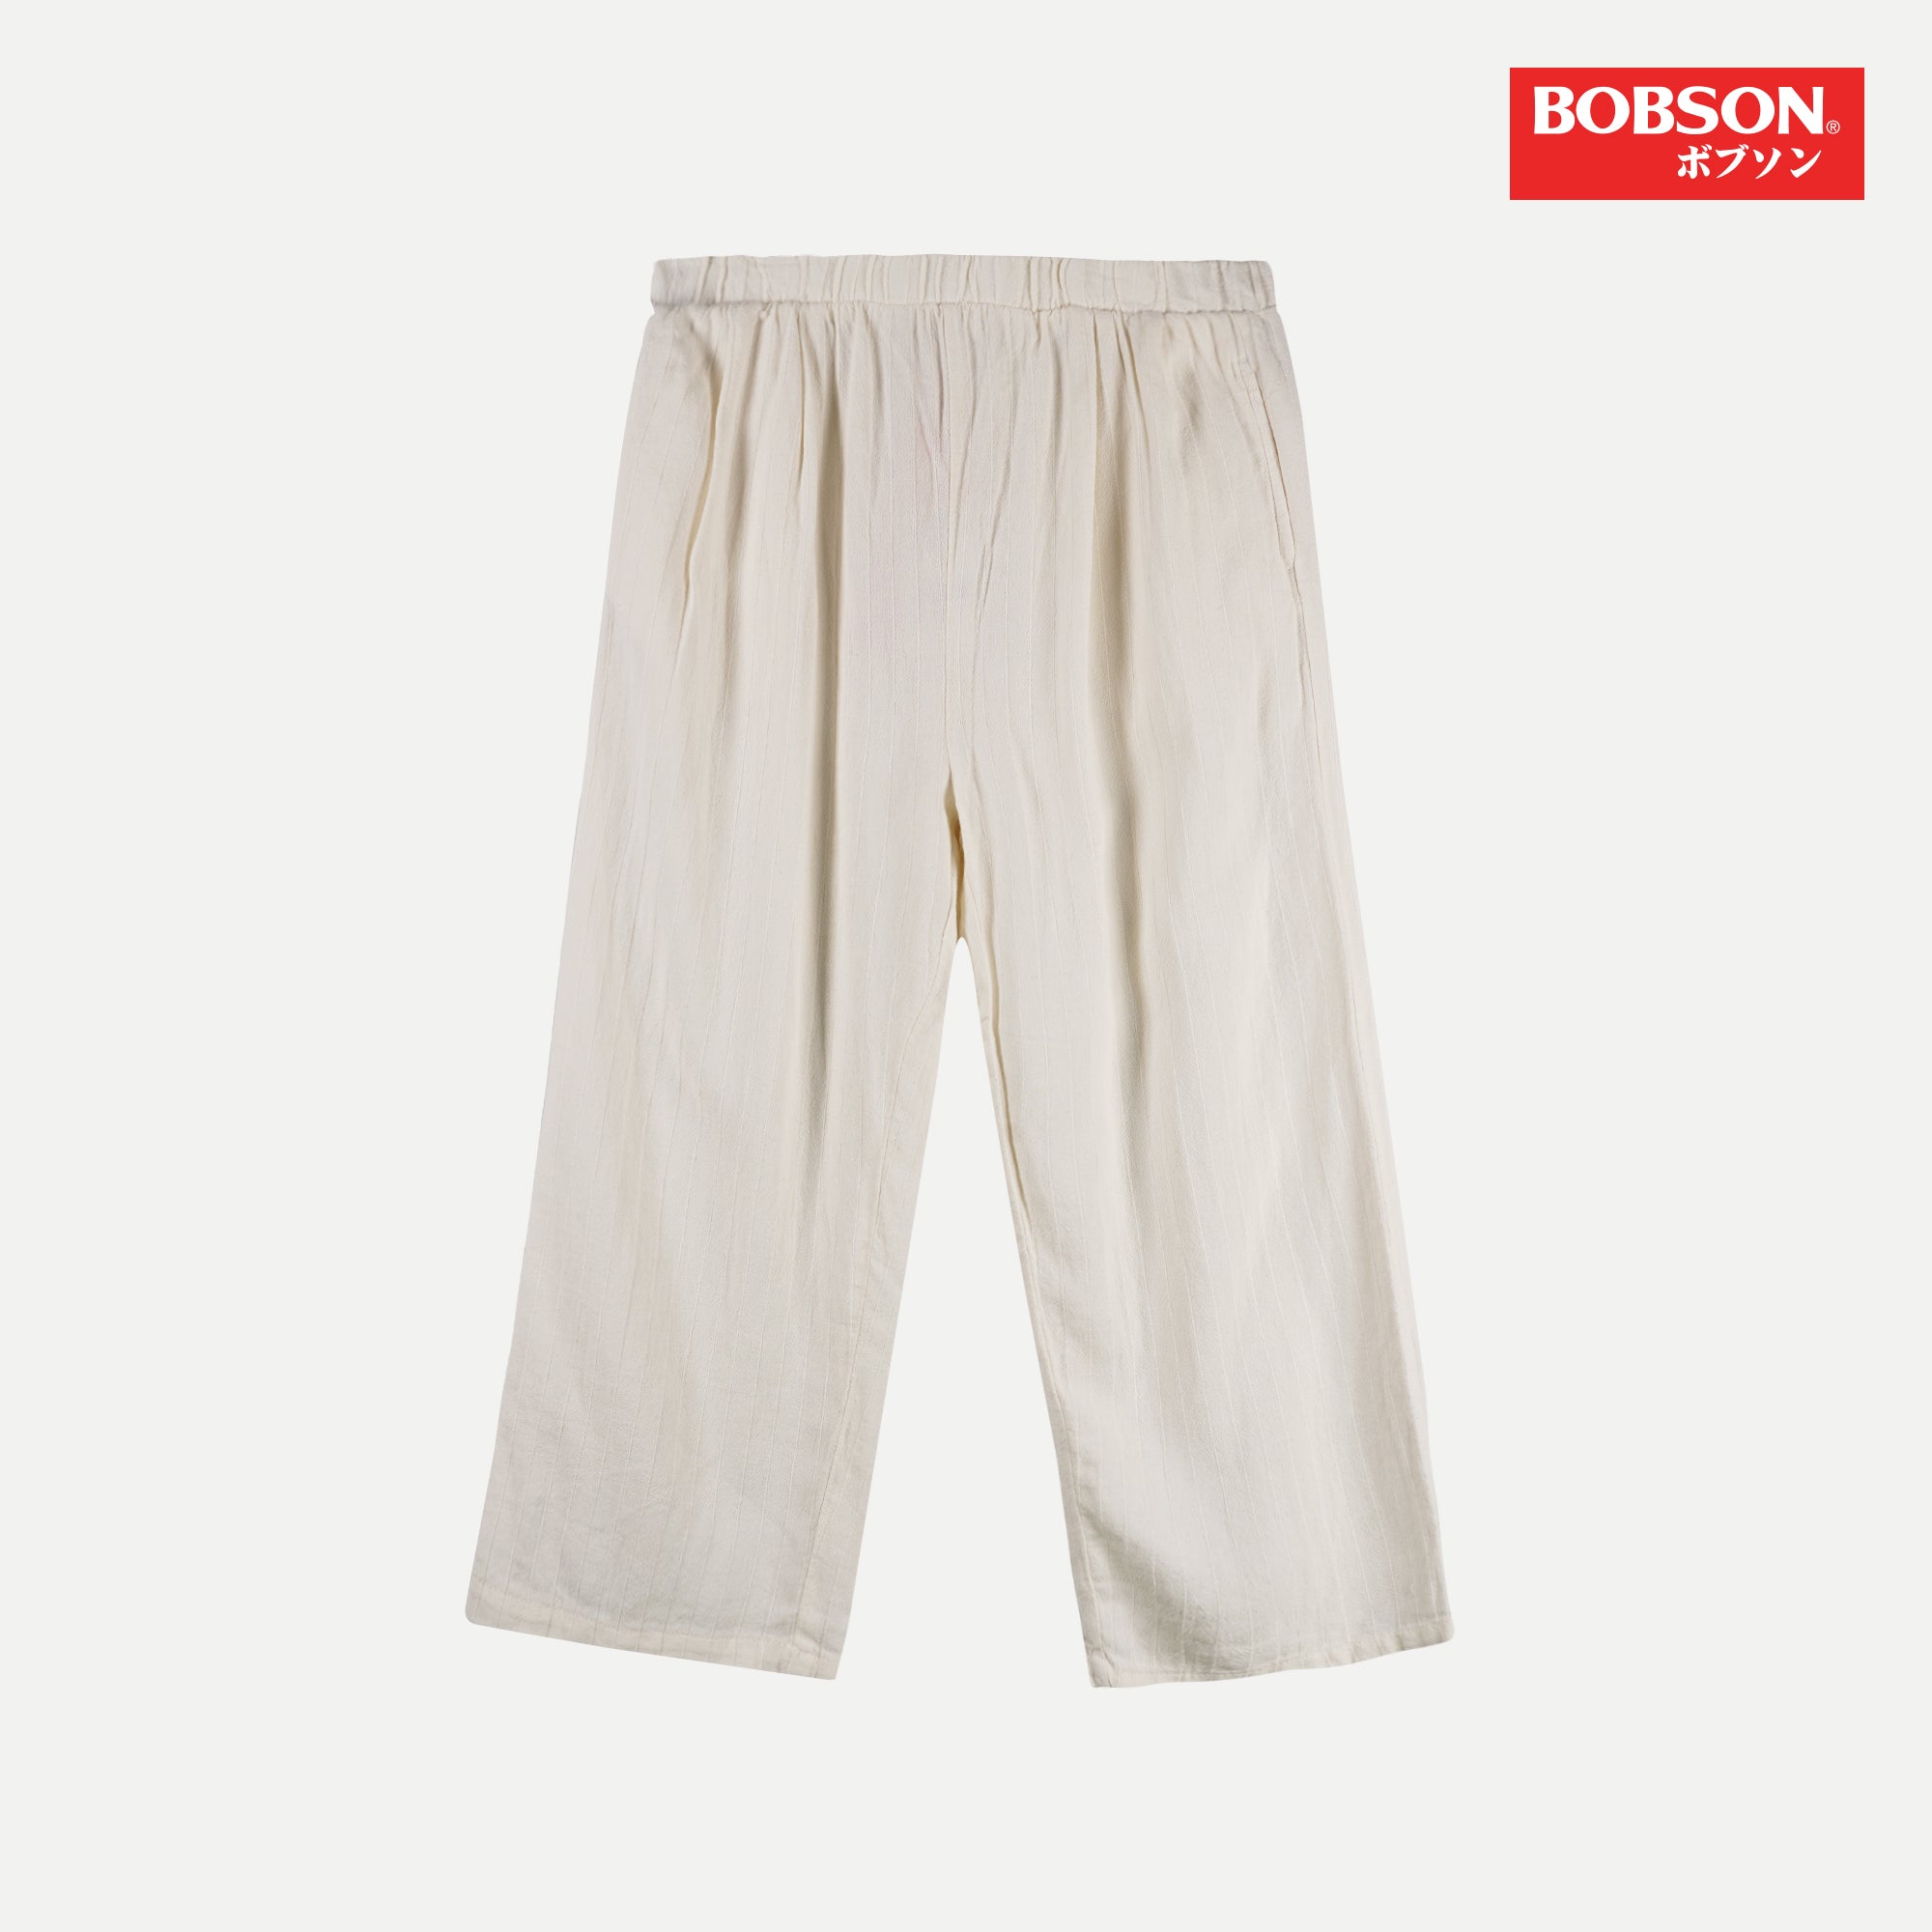 Bobson Japanese Ladies Basic Denim Stretchable Pants for Women